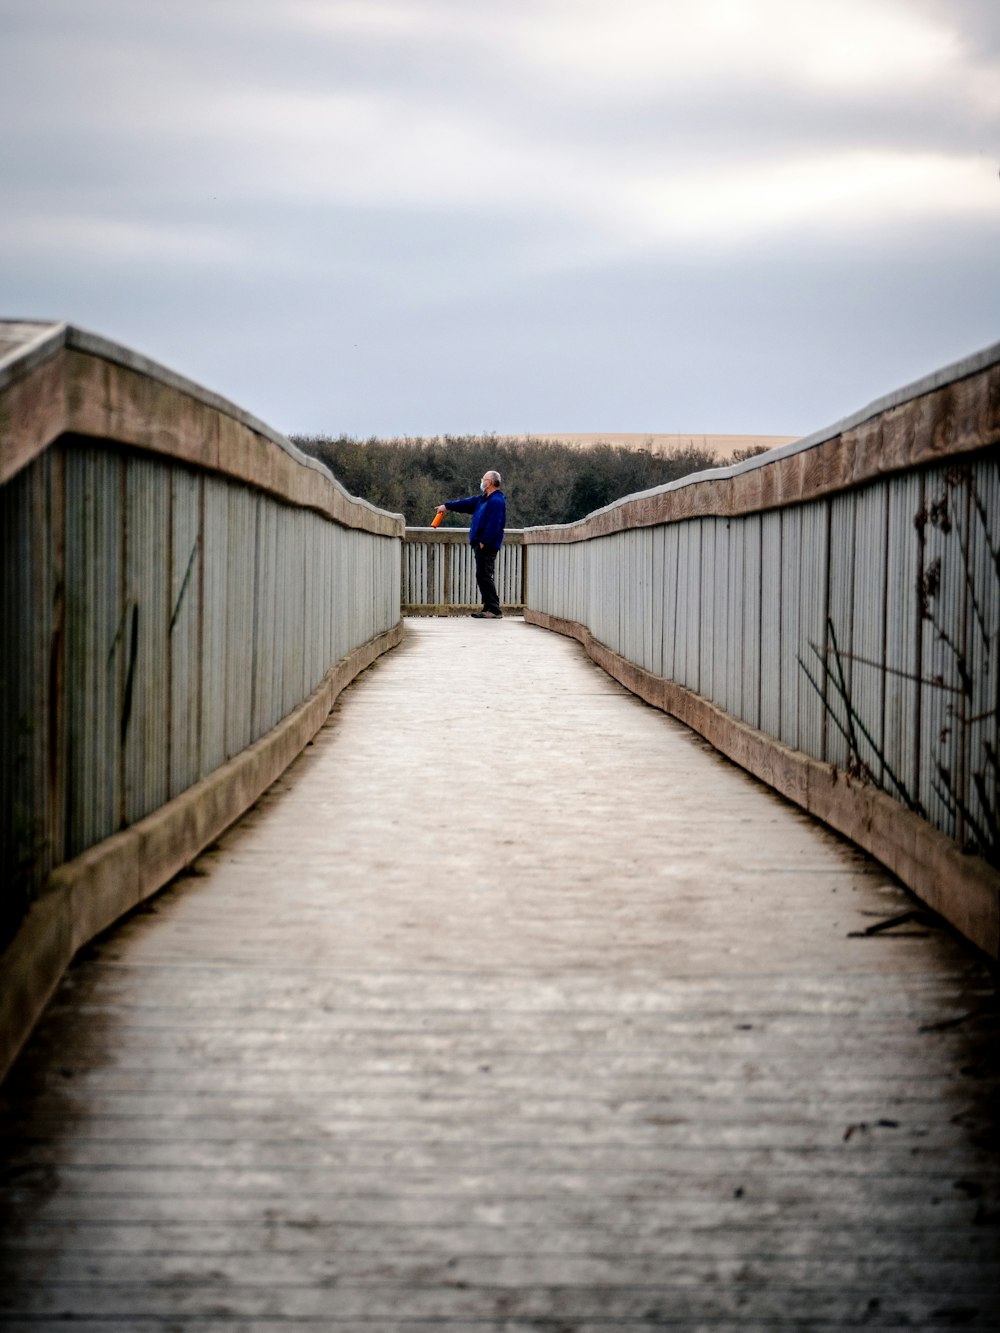 person in blue jacket walking on brown wooden bridge during daytime